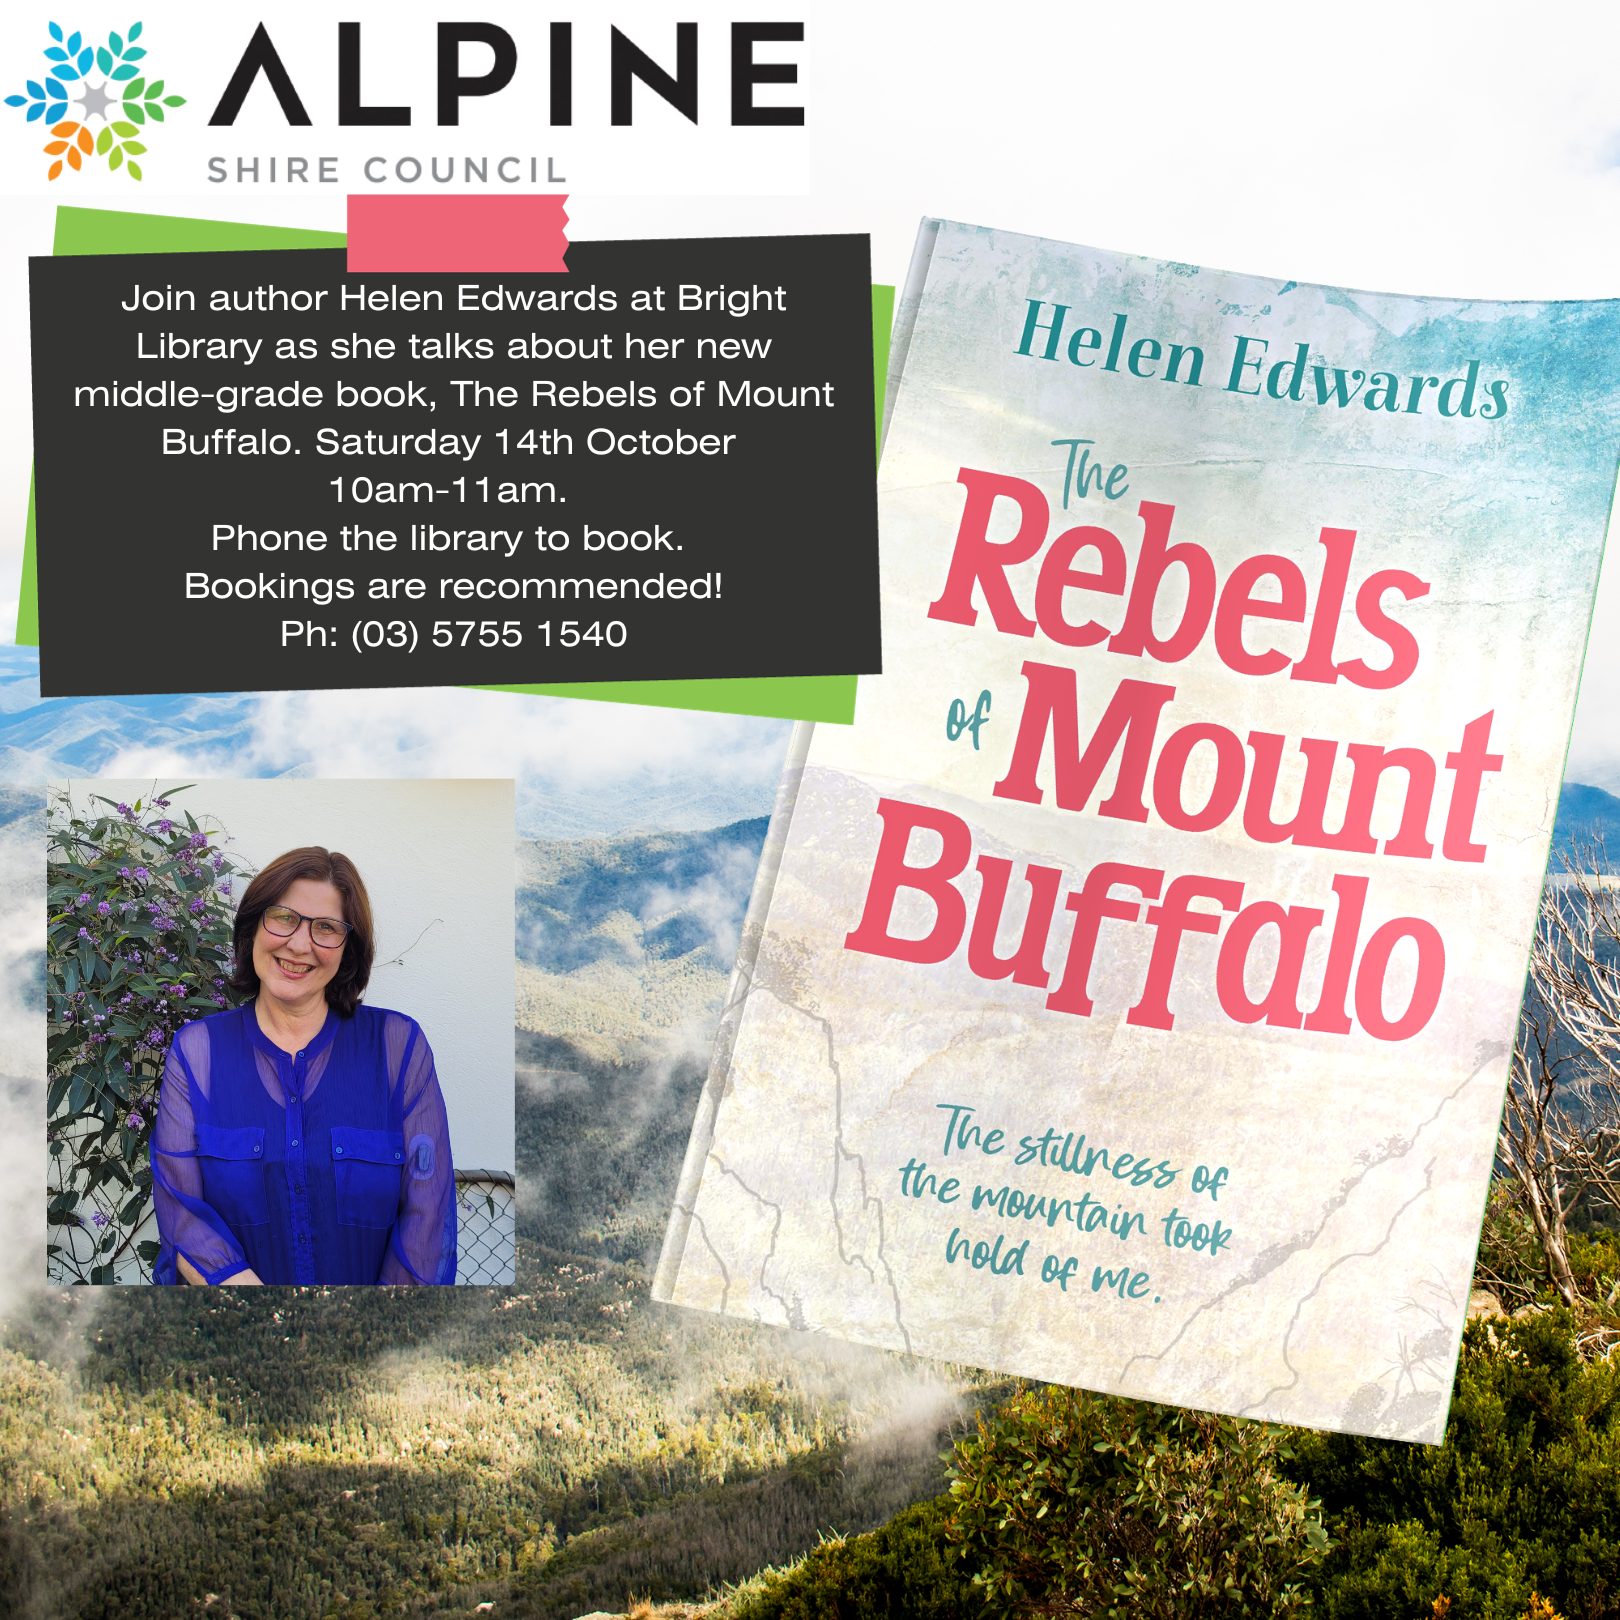 The Rebels of Mount Buffalo by Helen Edwards